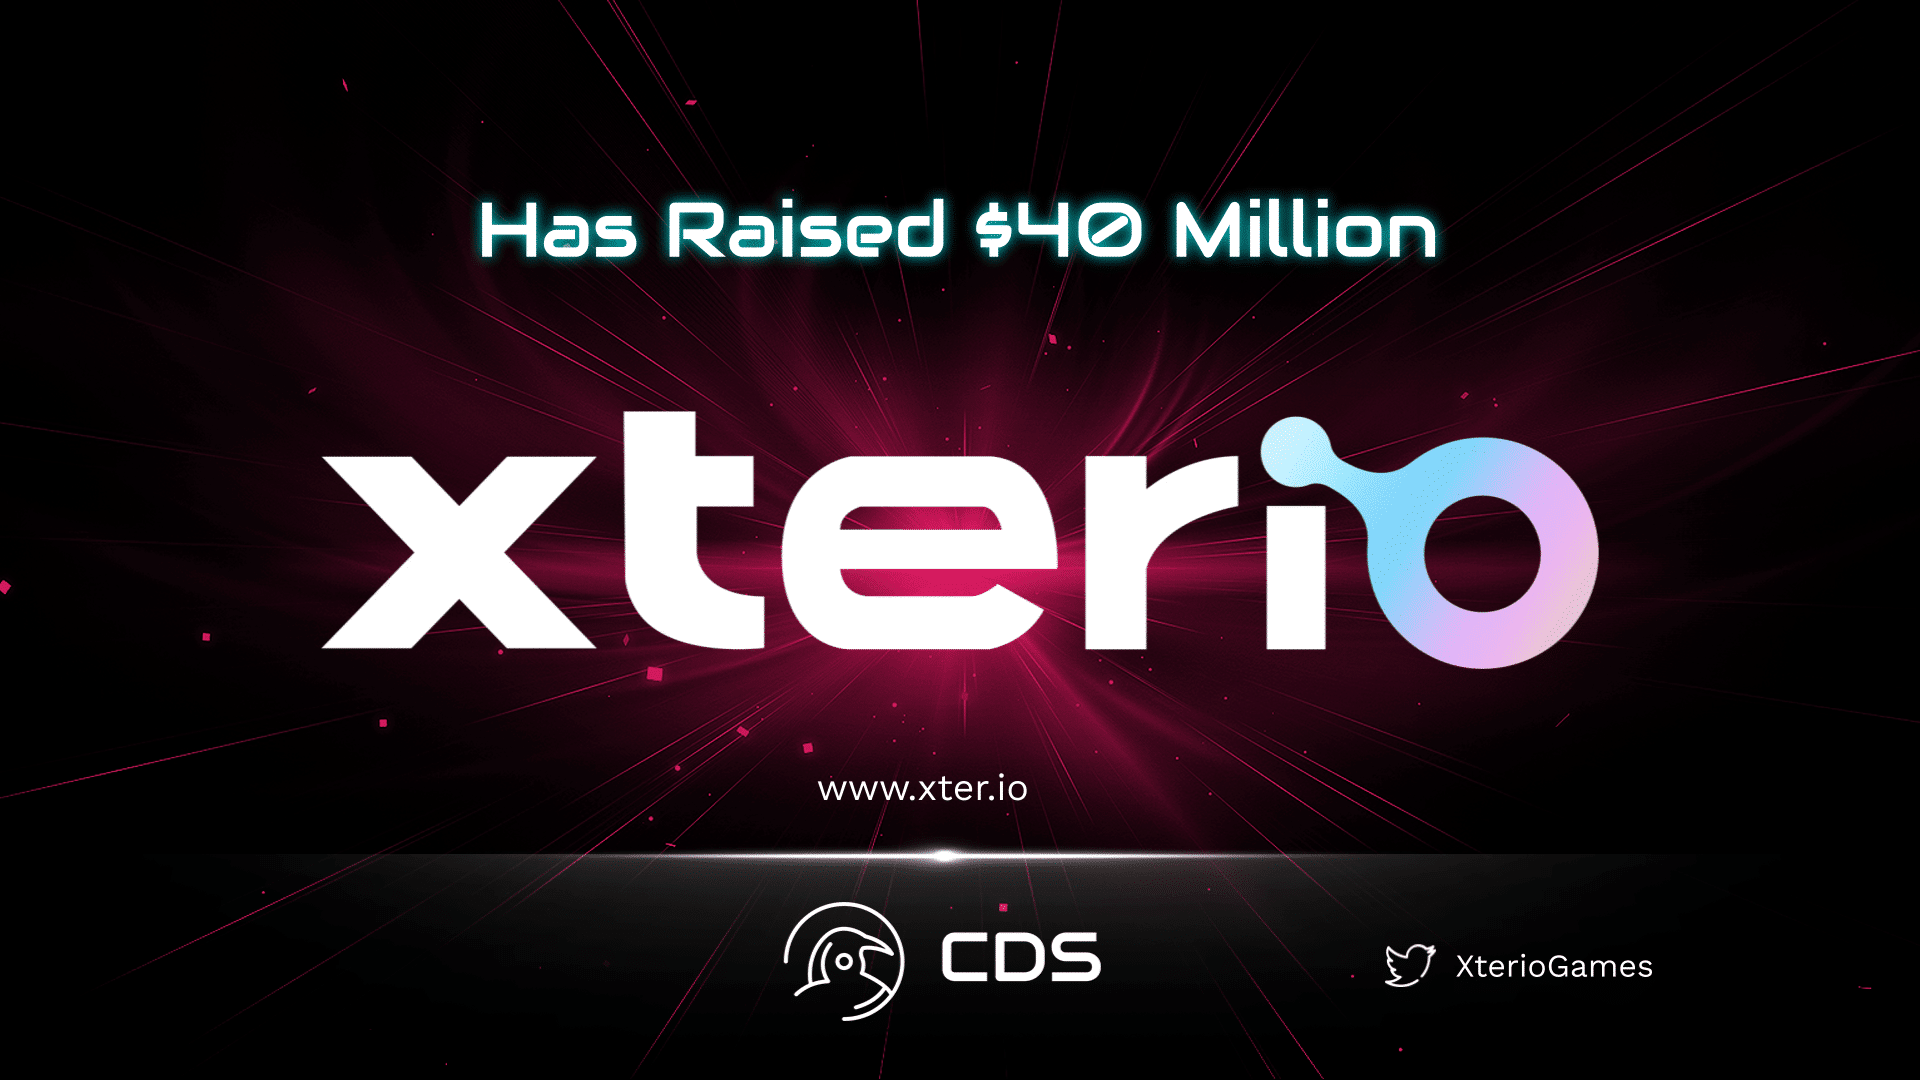 Xterio has Raised $40 Million